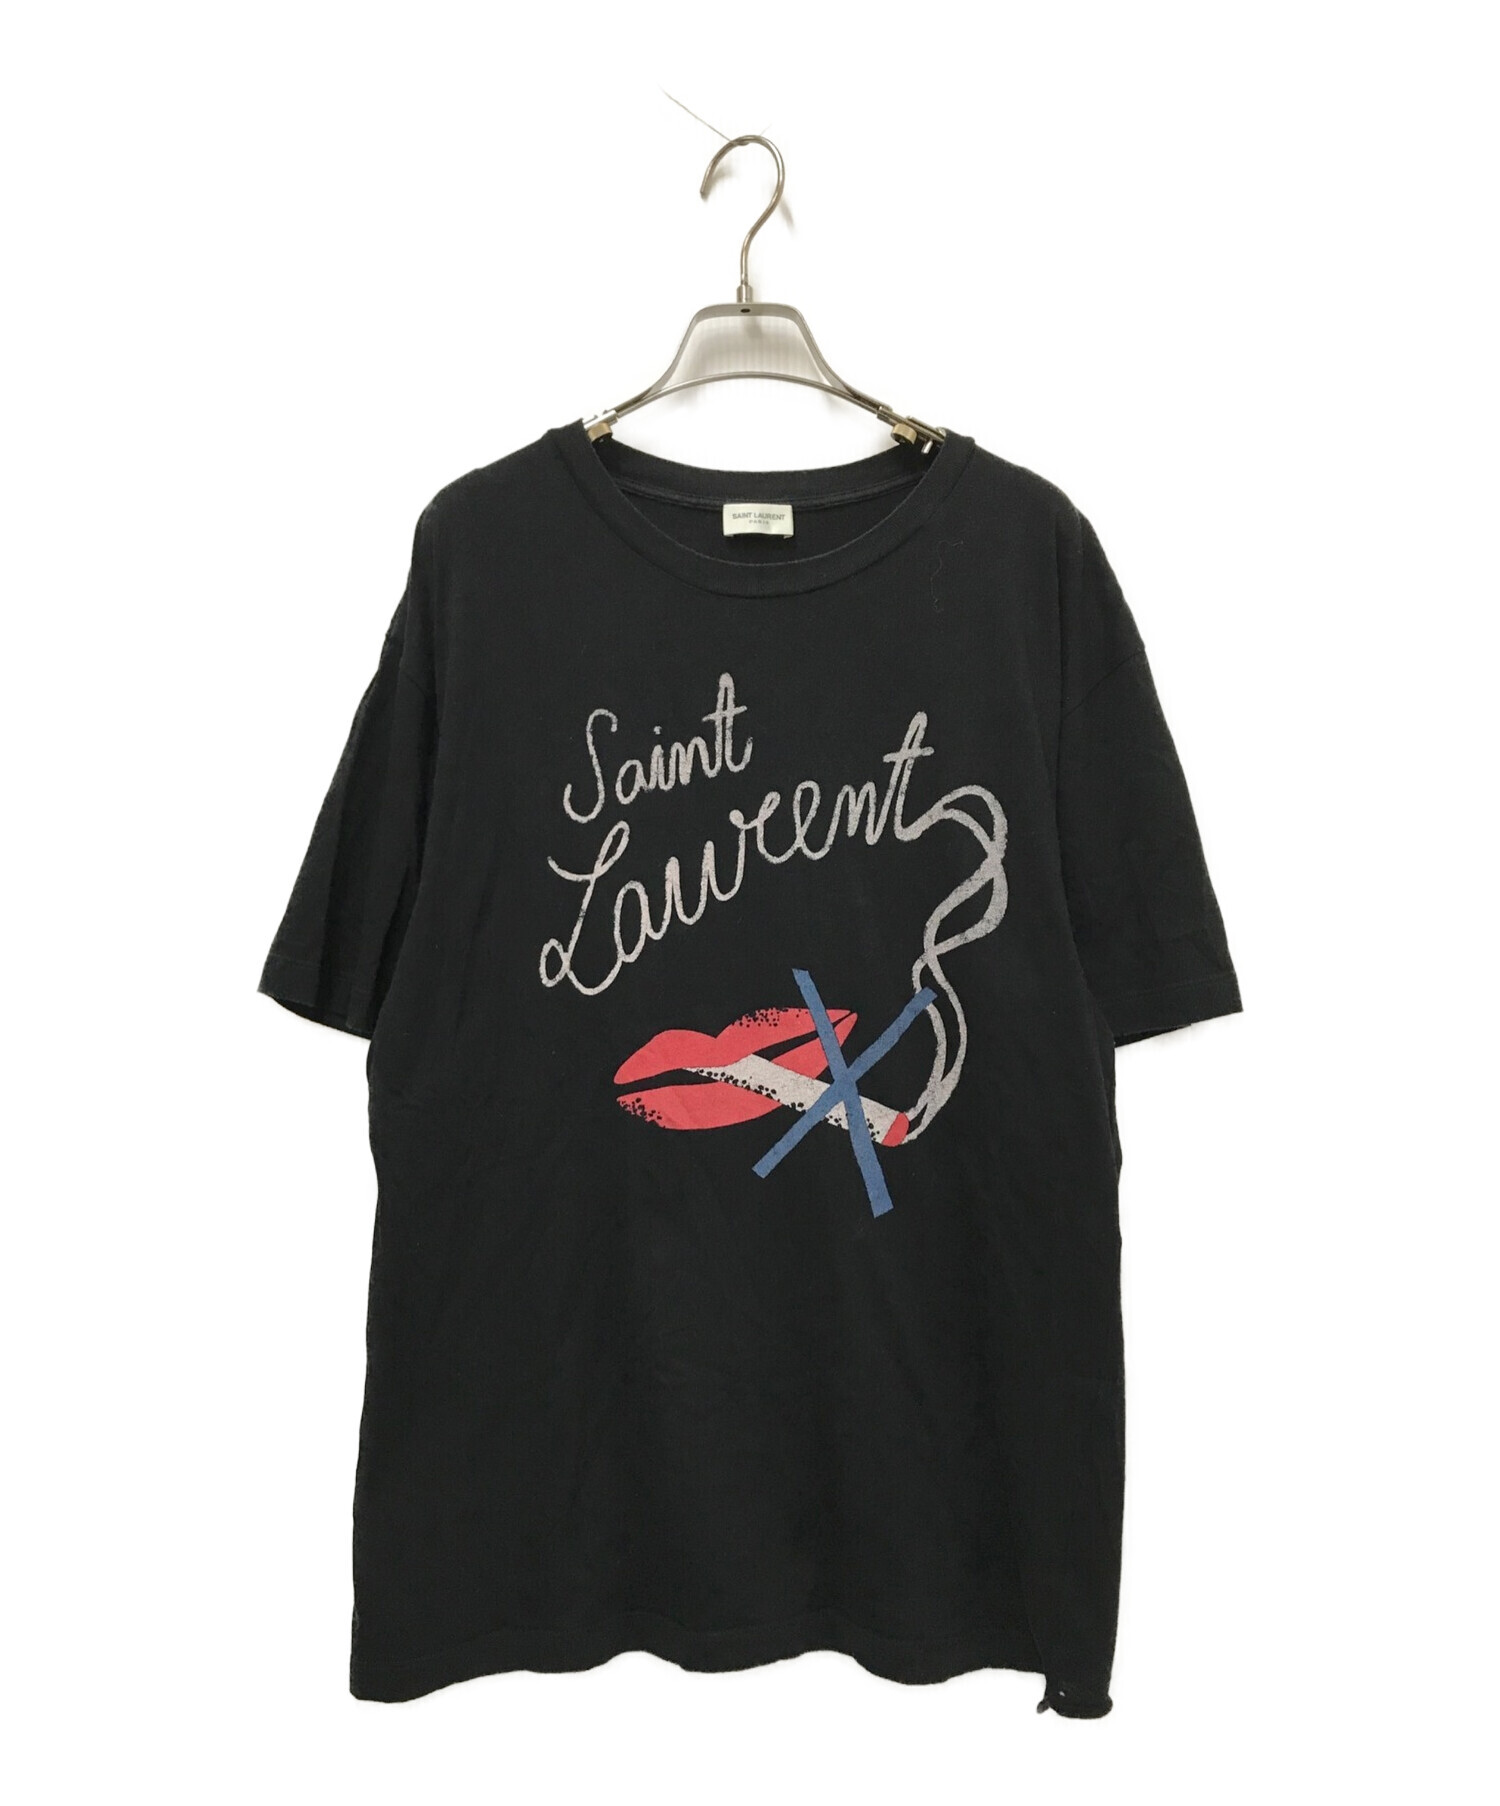 saint laurent サンローラン ロゴ Tシャツ 新品 ケリングタグトップス